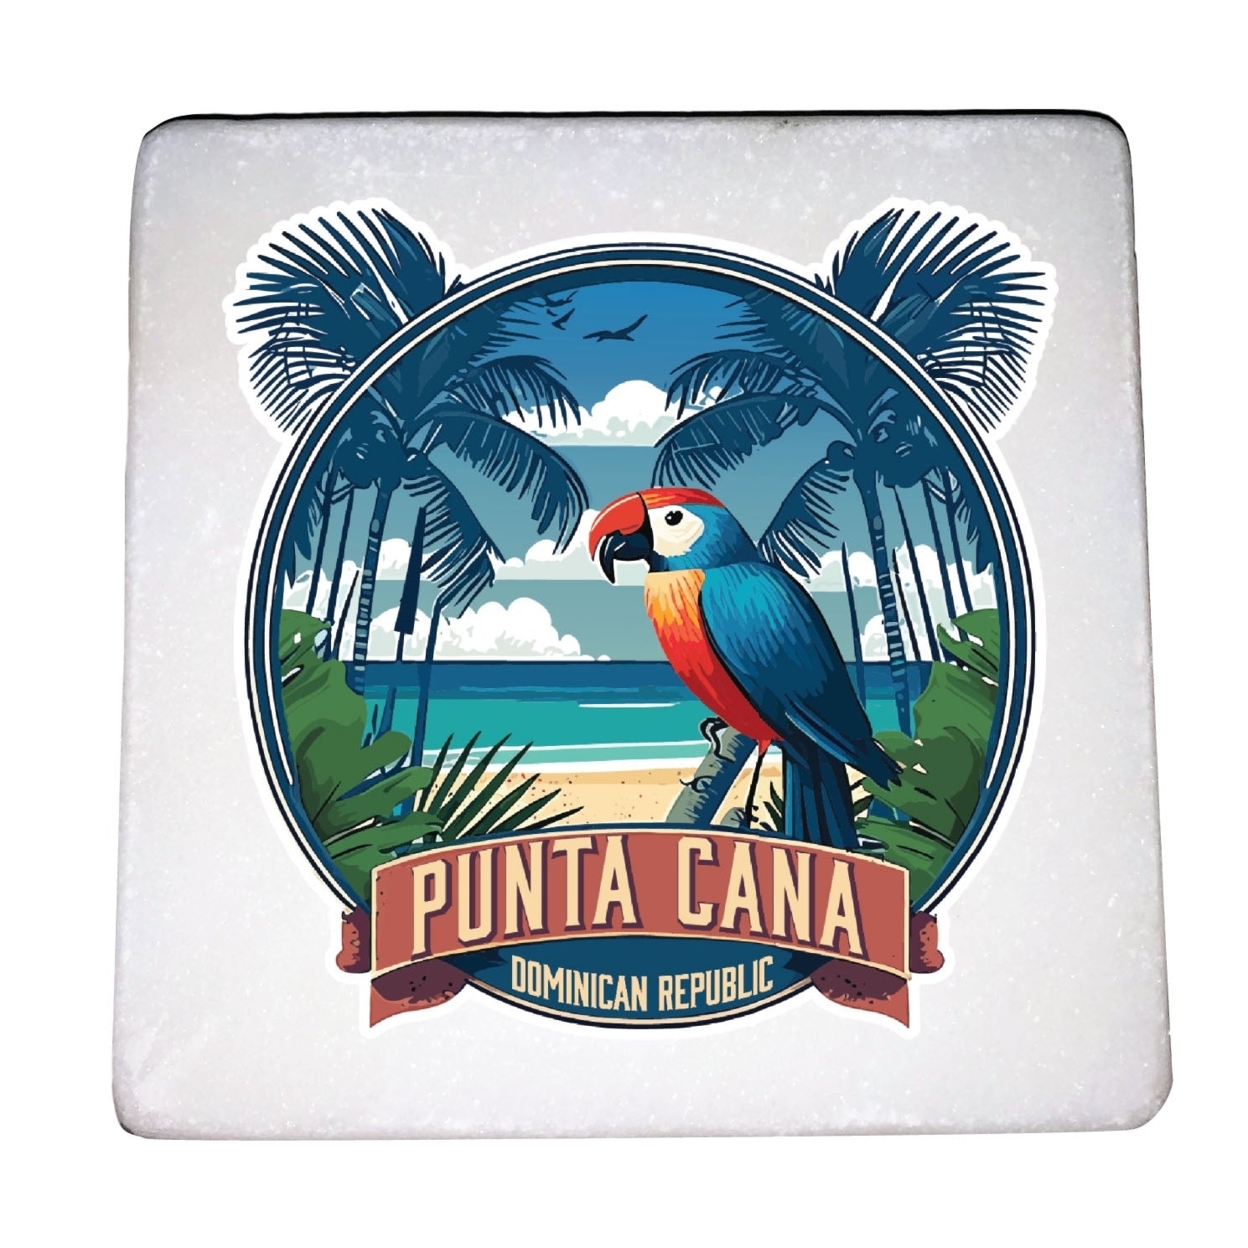 Punta Cana Dominican Republic Souvenir 4x4-Inch Coaster Marble 2